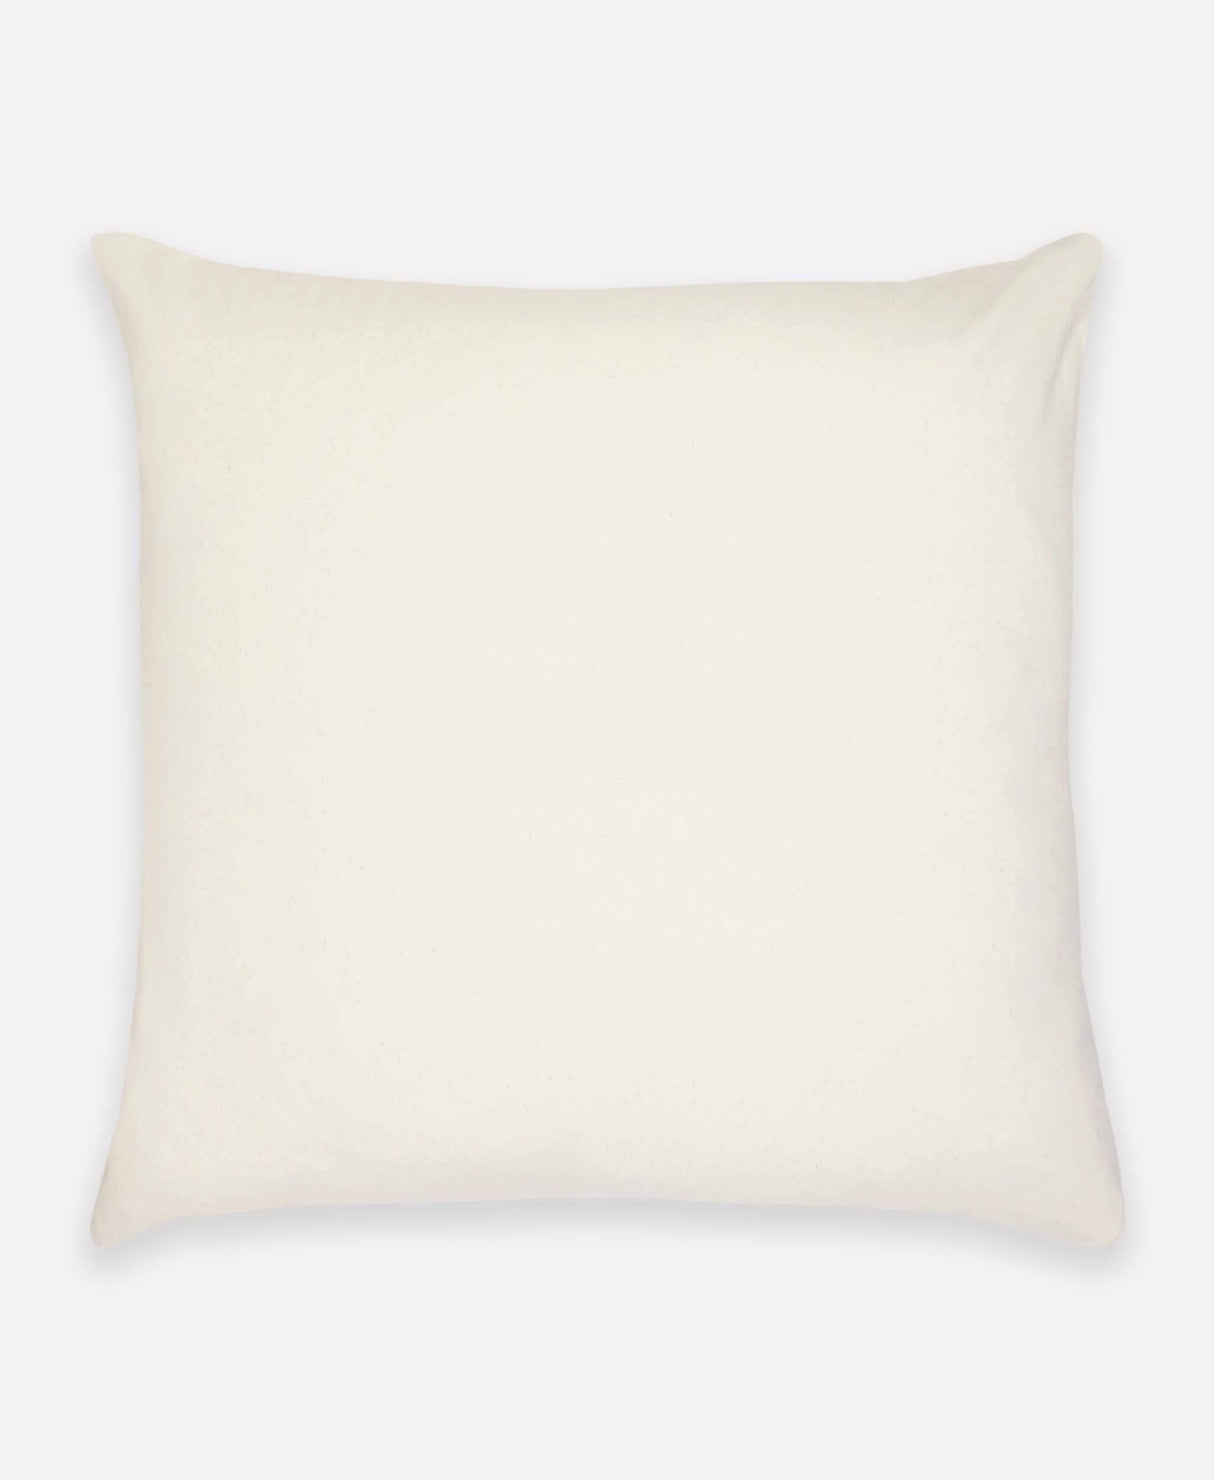 Multi Check Throw Pillow Cover - Holistic Habitat 